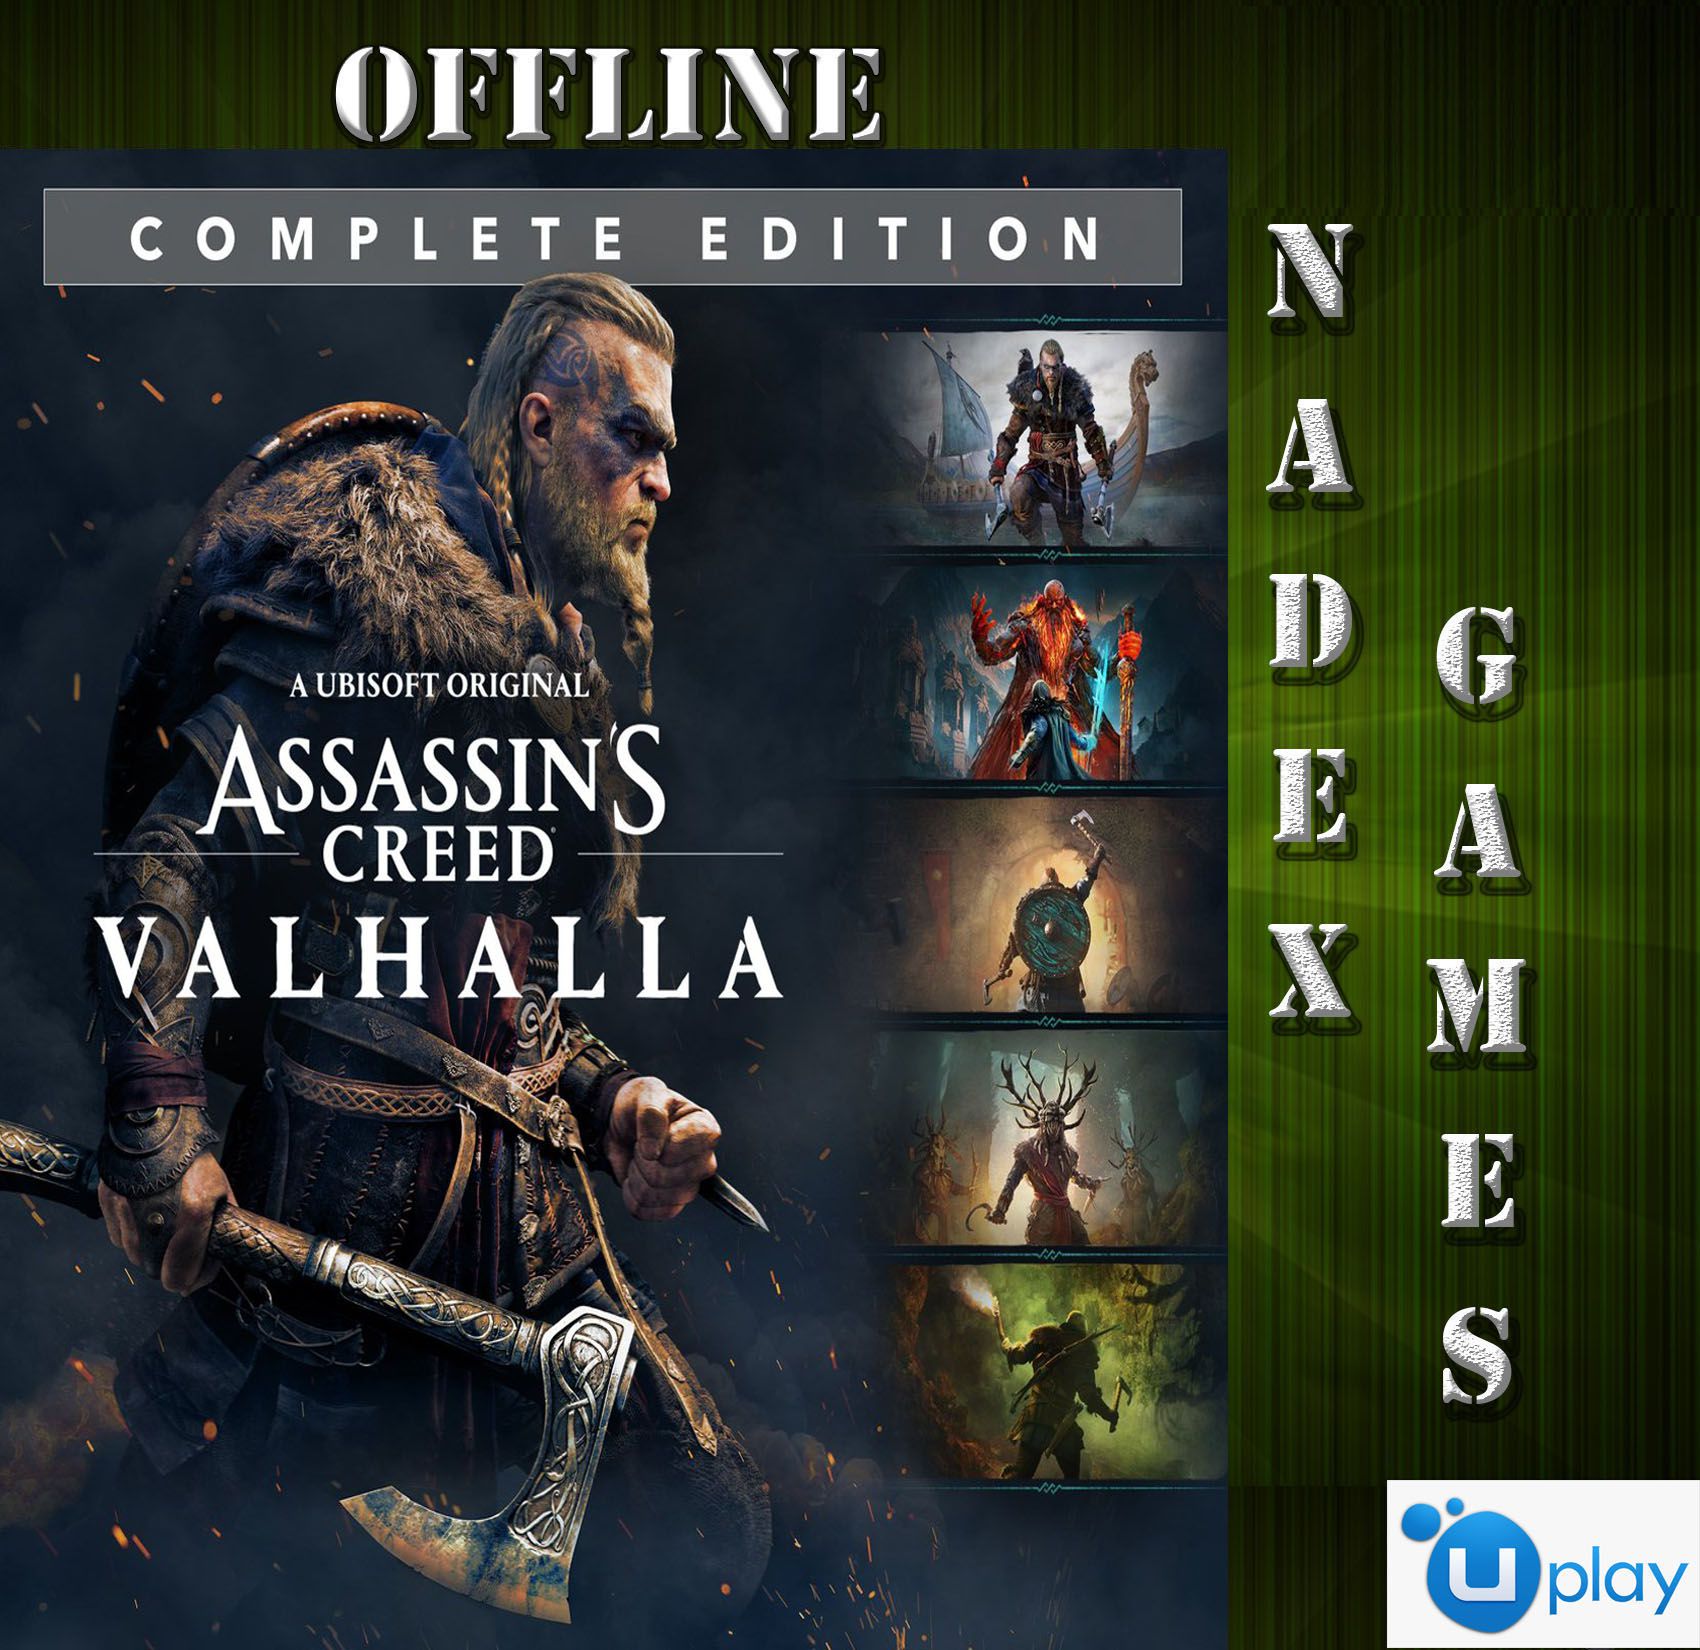 Assassin's Creed Valhalla requisitos de sistema